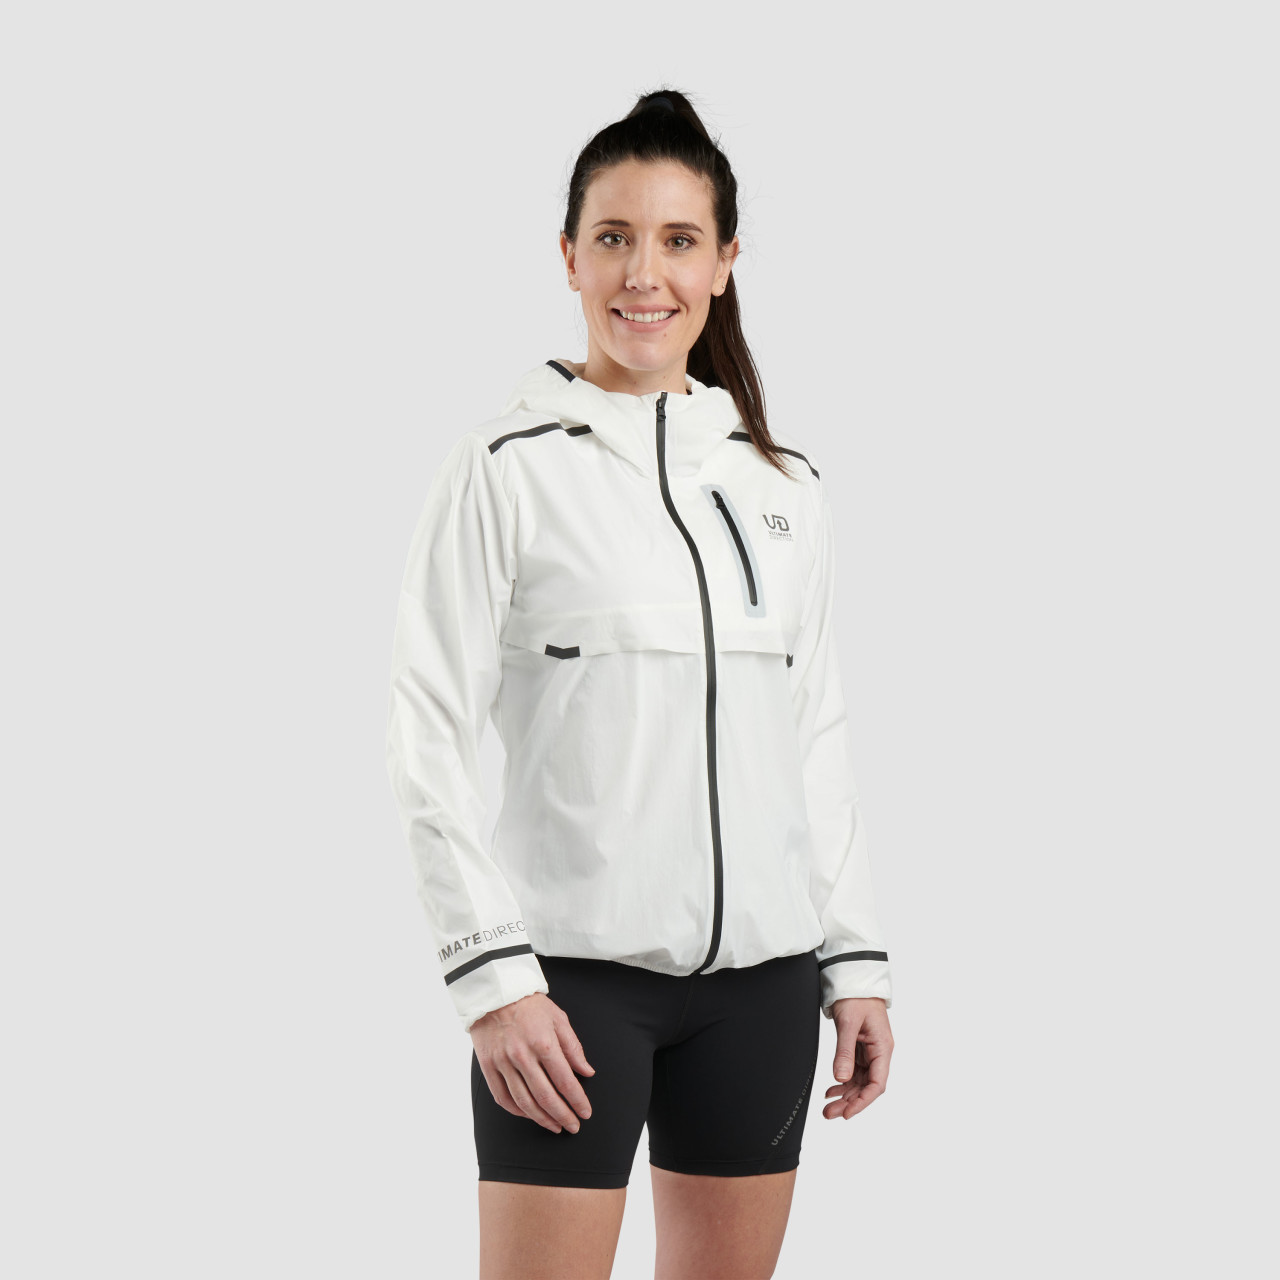 Ultimate Direction Women's Aerolight Wind Jacket in White Size Medium